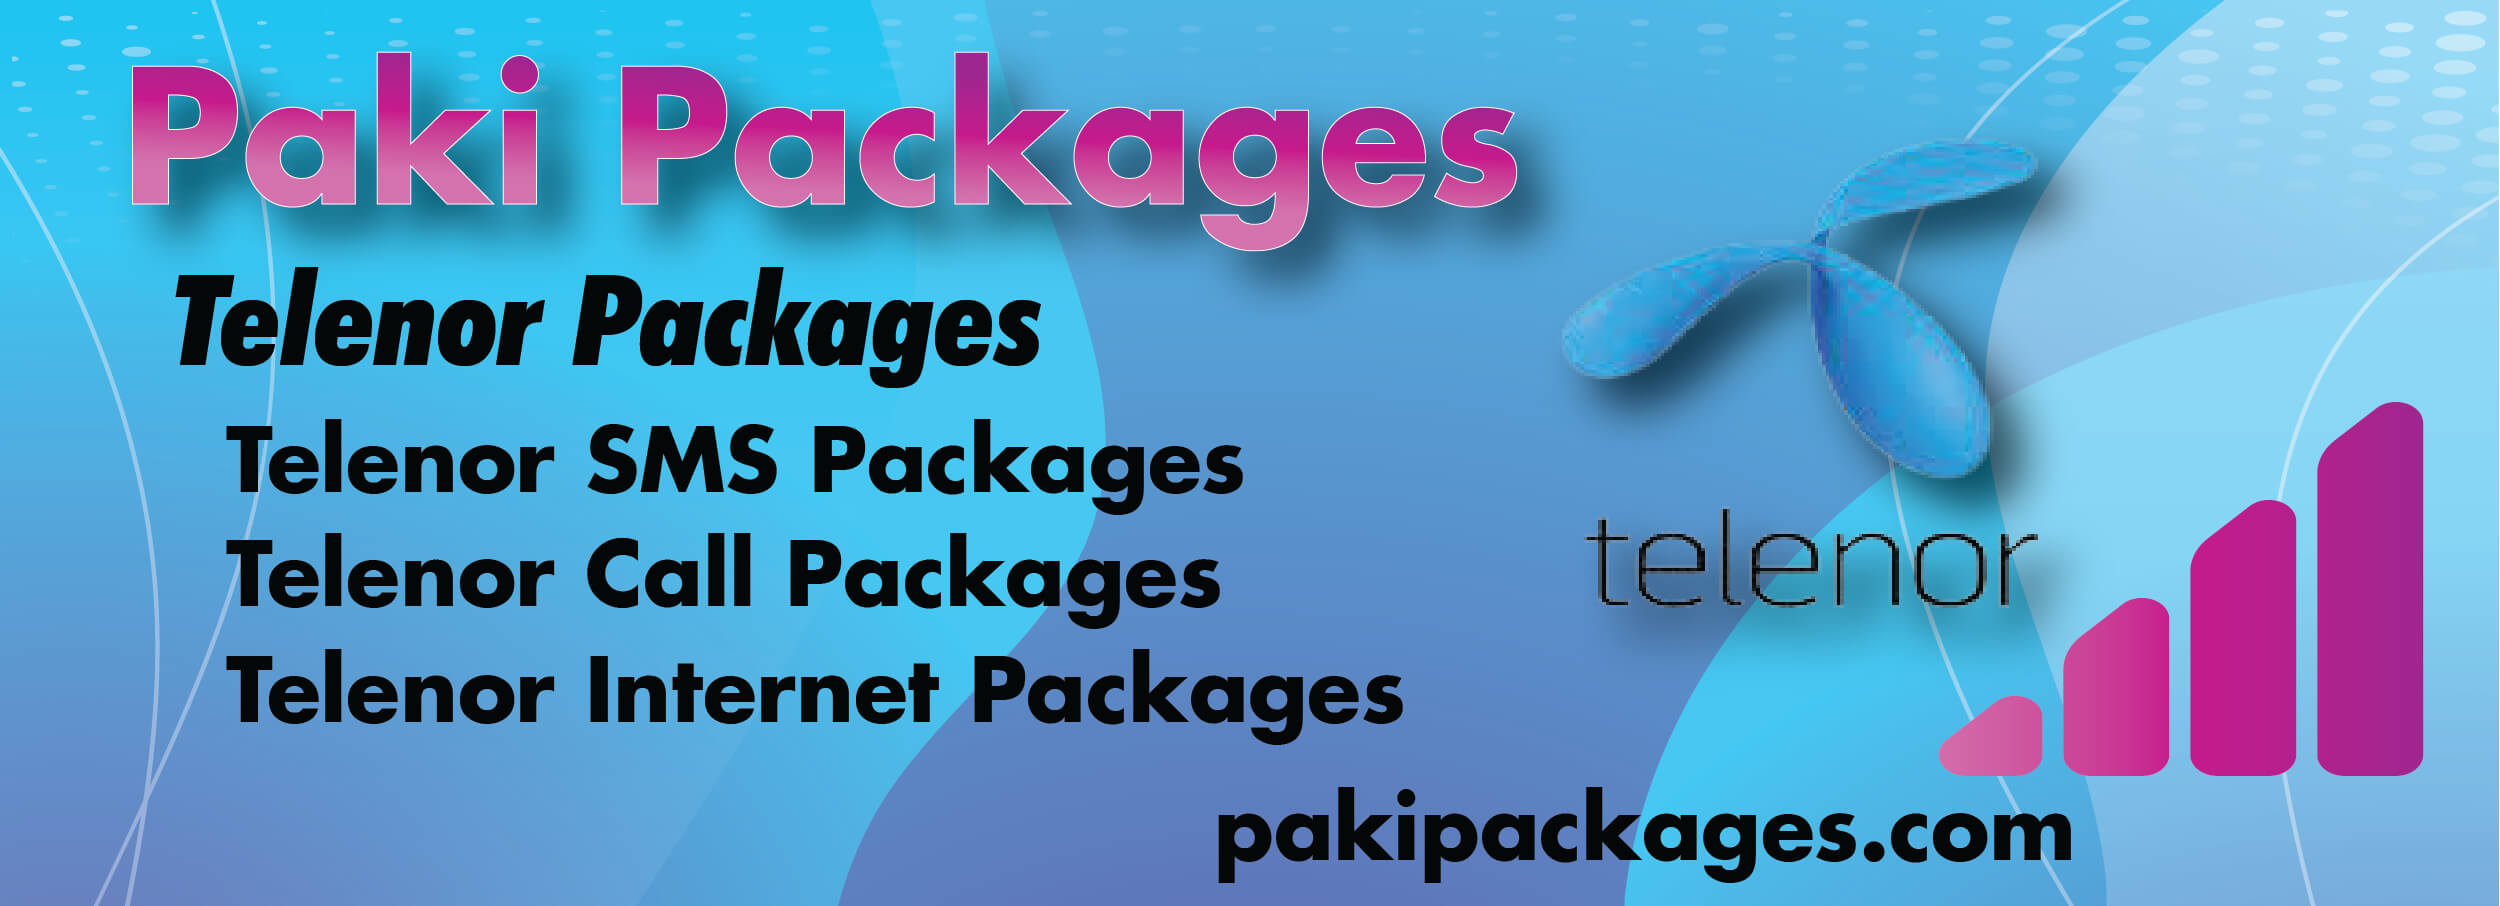 Telenor Paki Packages